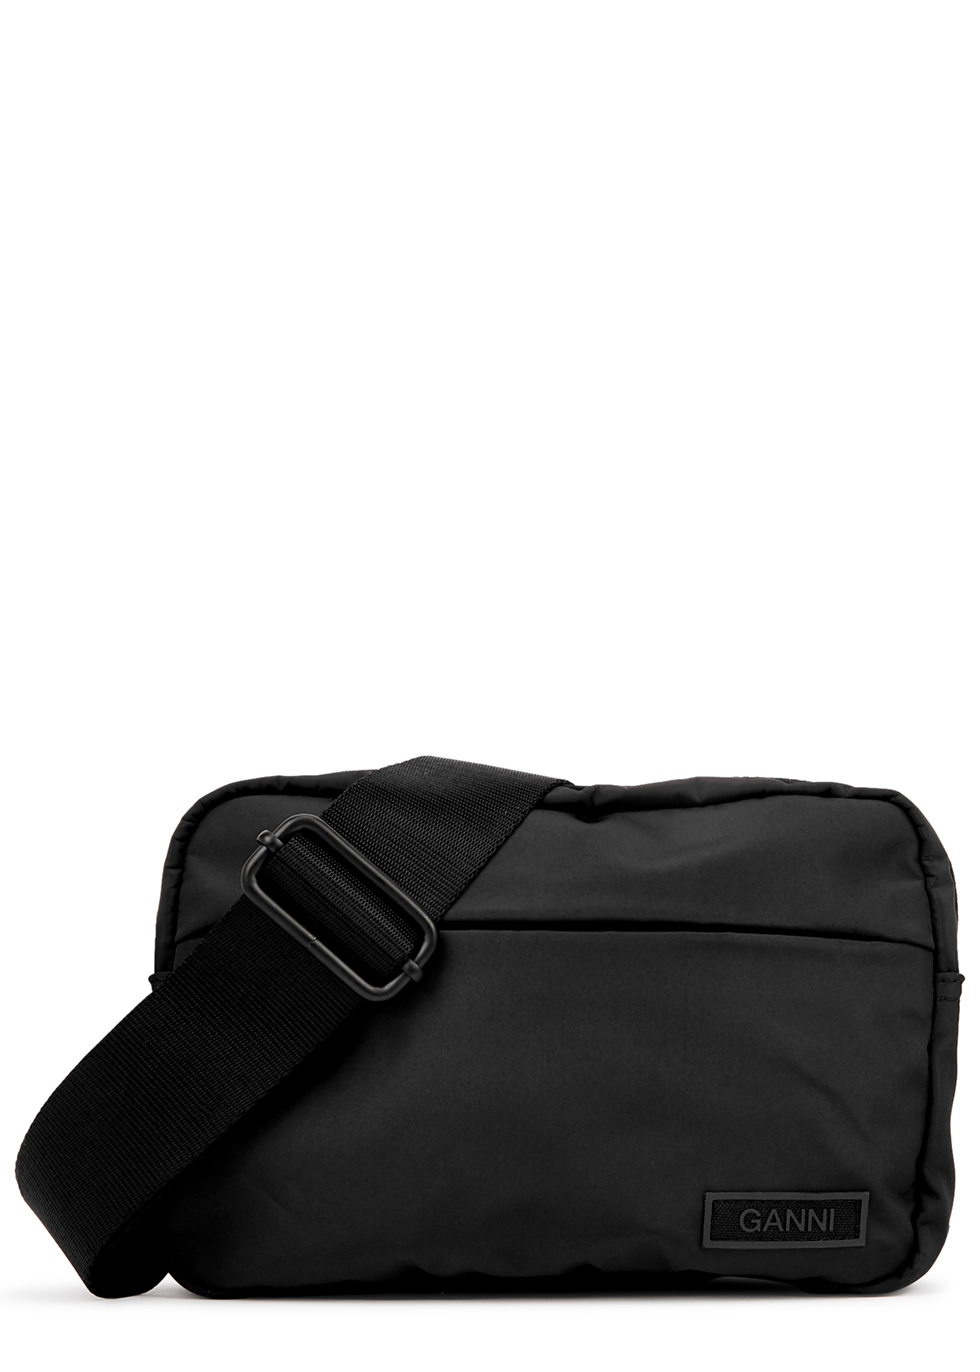 Ganni Black nylon cross-body bag - Harvey Nichols